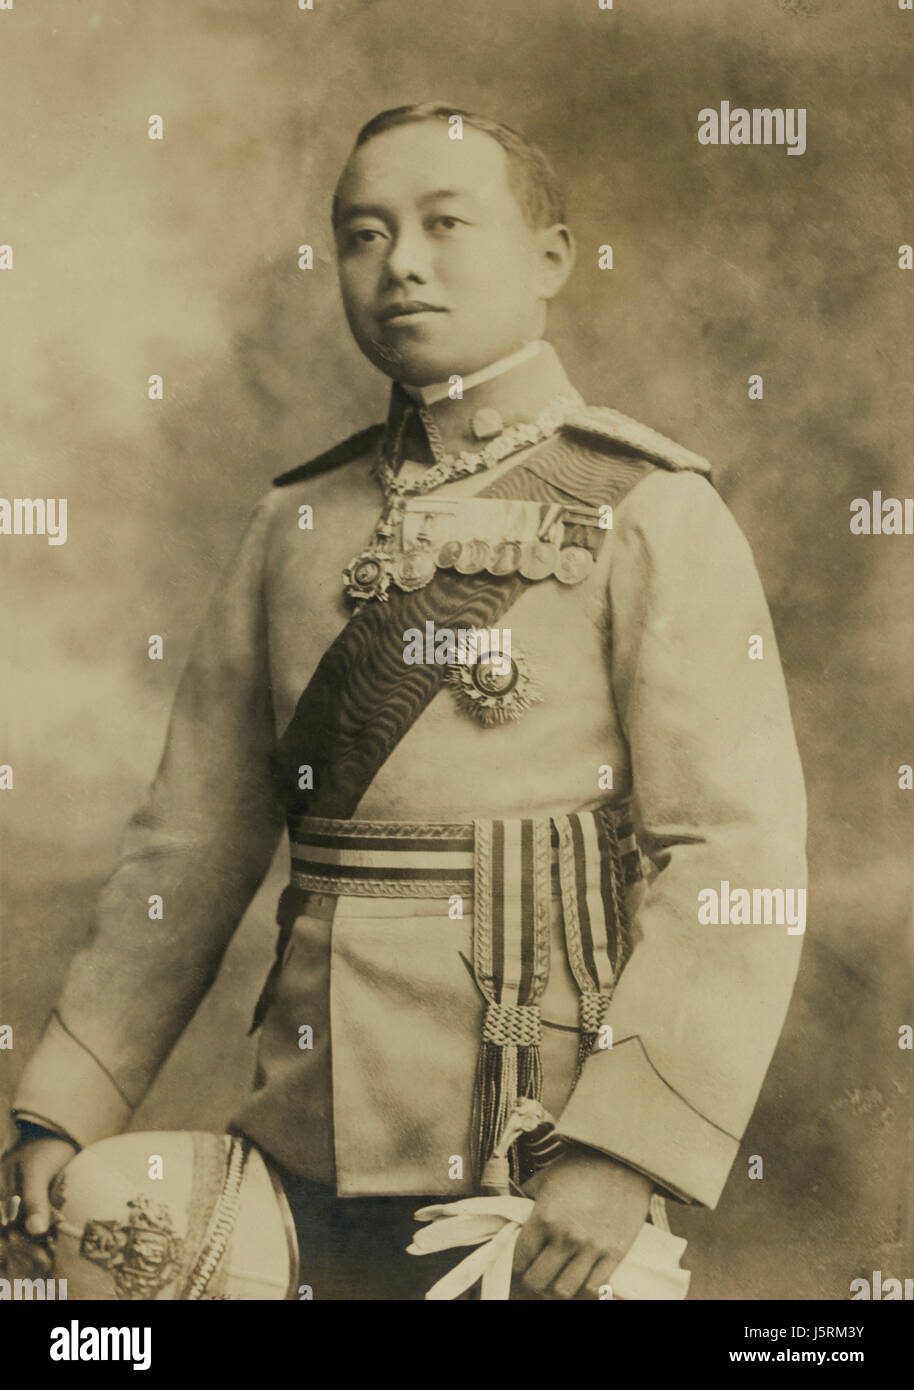 Vajiravudh or Rama VI (1880-1925), King of Siam 1910-25, Portrait in Military Uniform, 1910 Stock Photo